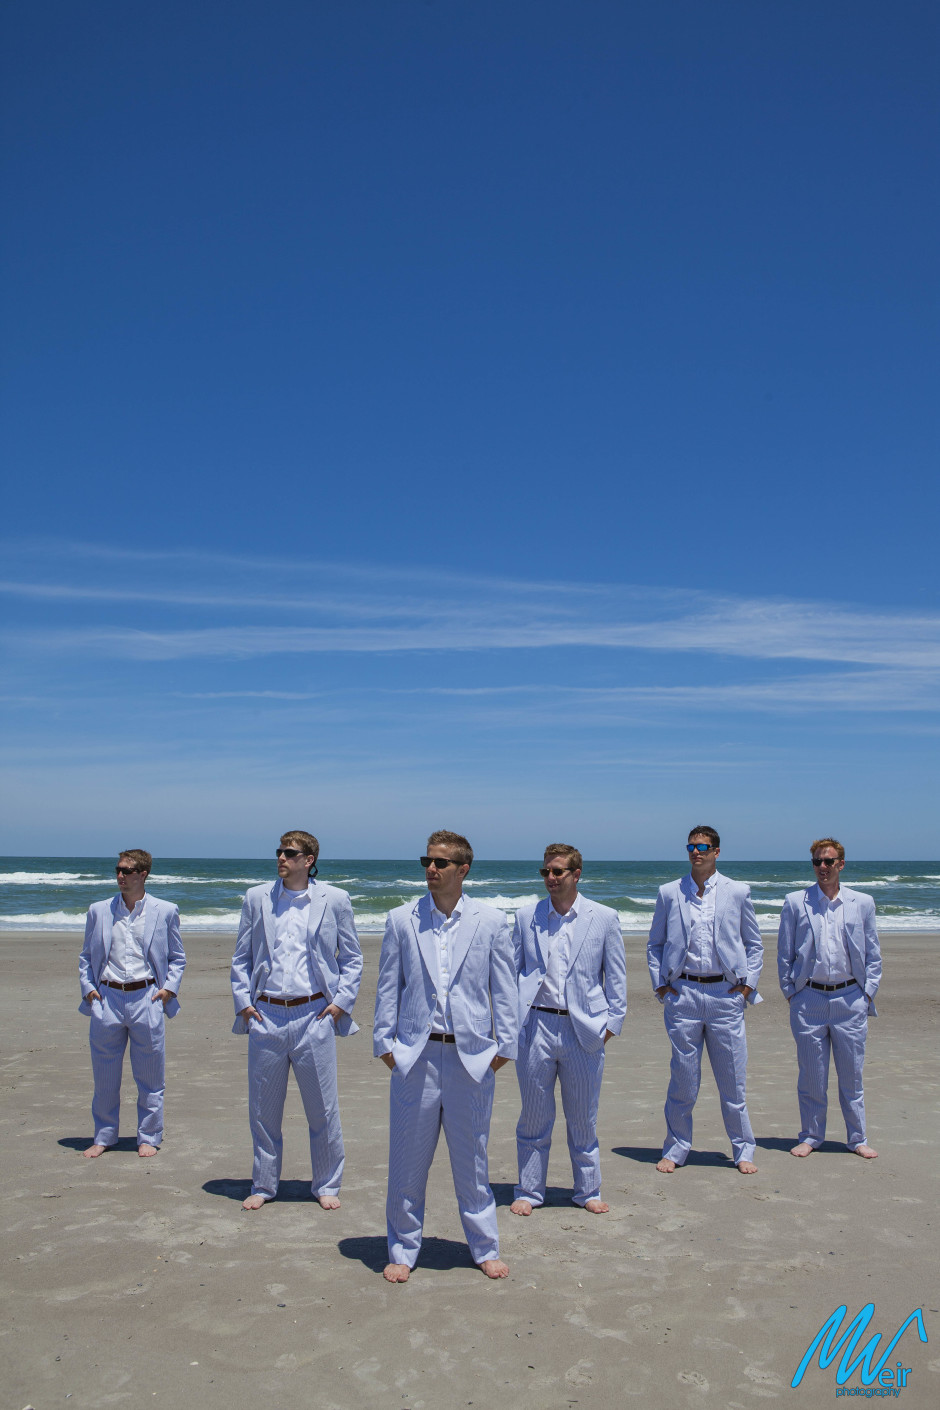 groomsmen wearing sun glasses on the beach in seersucker suits